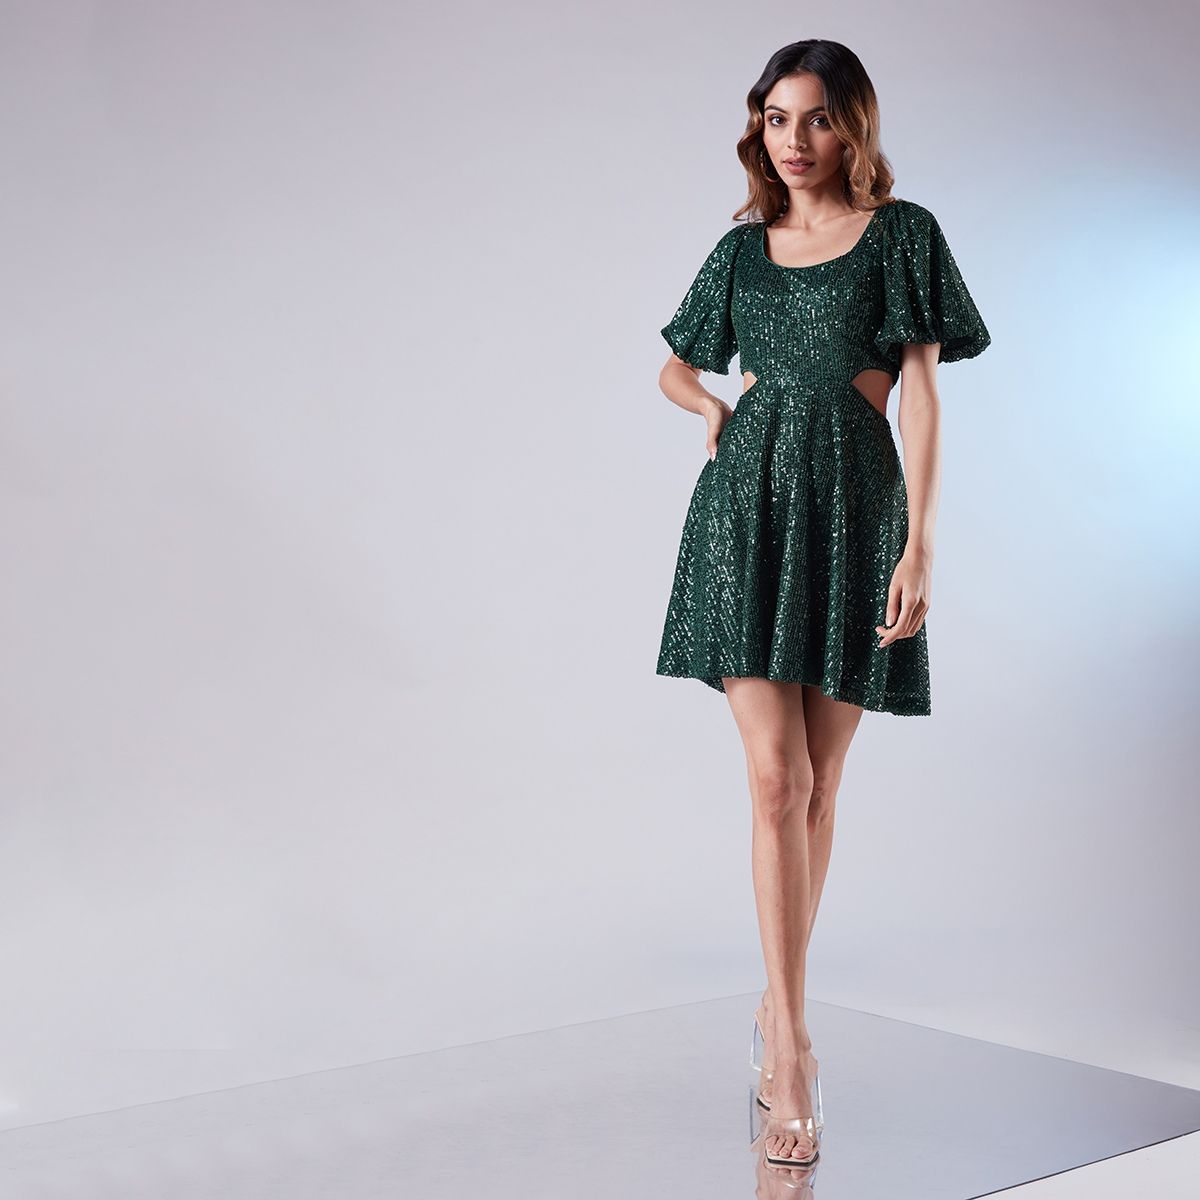 Jenny Packham Emerald Sequin Dress With Crystal Embellishment  Farfetch